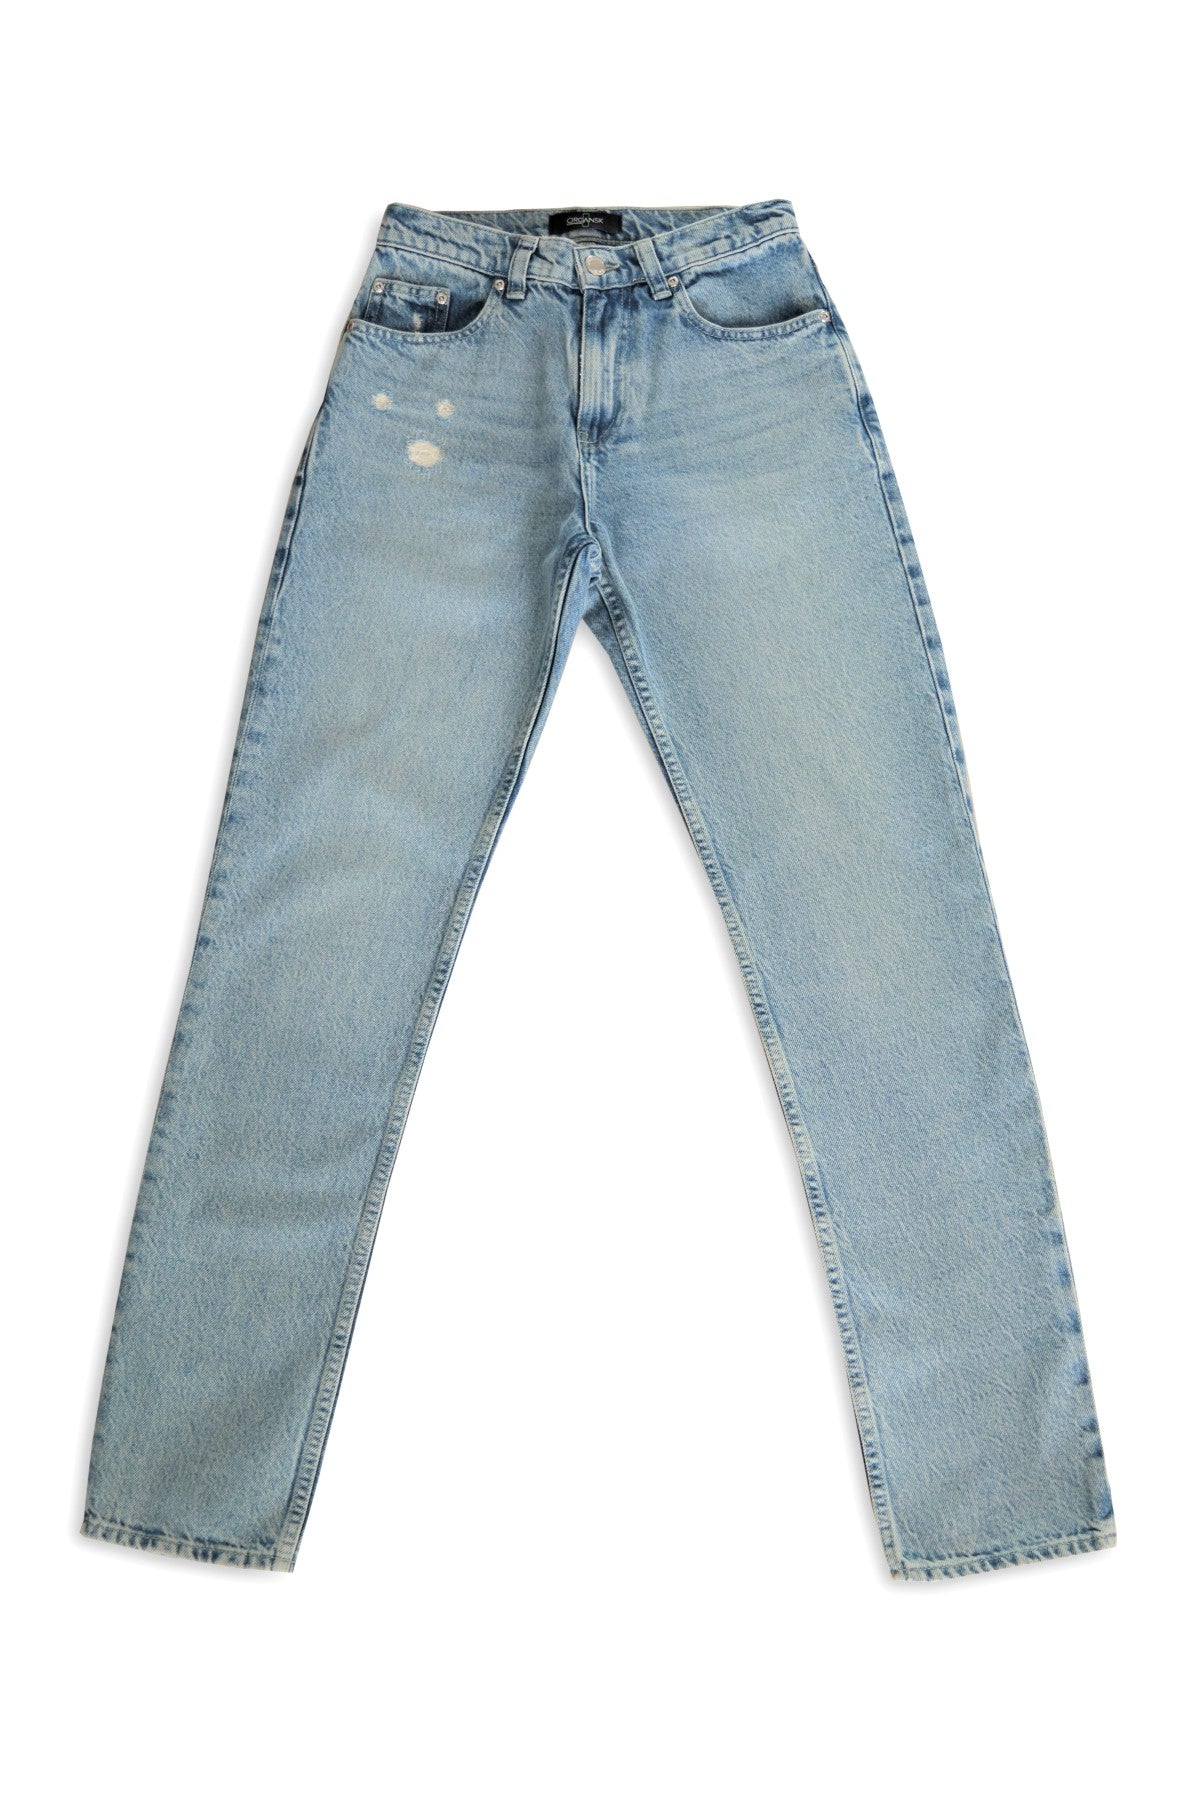 Women's organic jeans denim